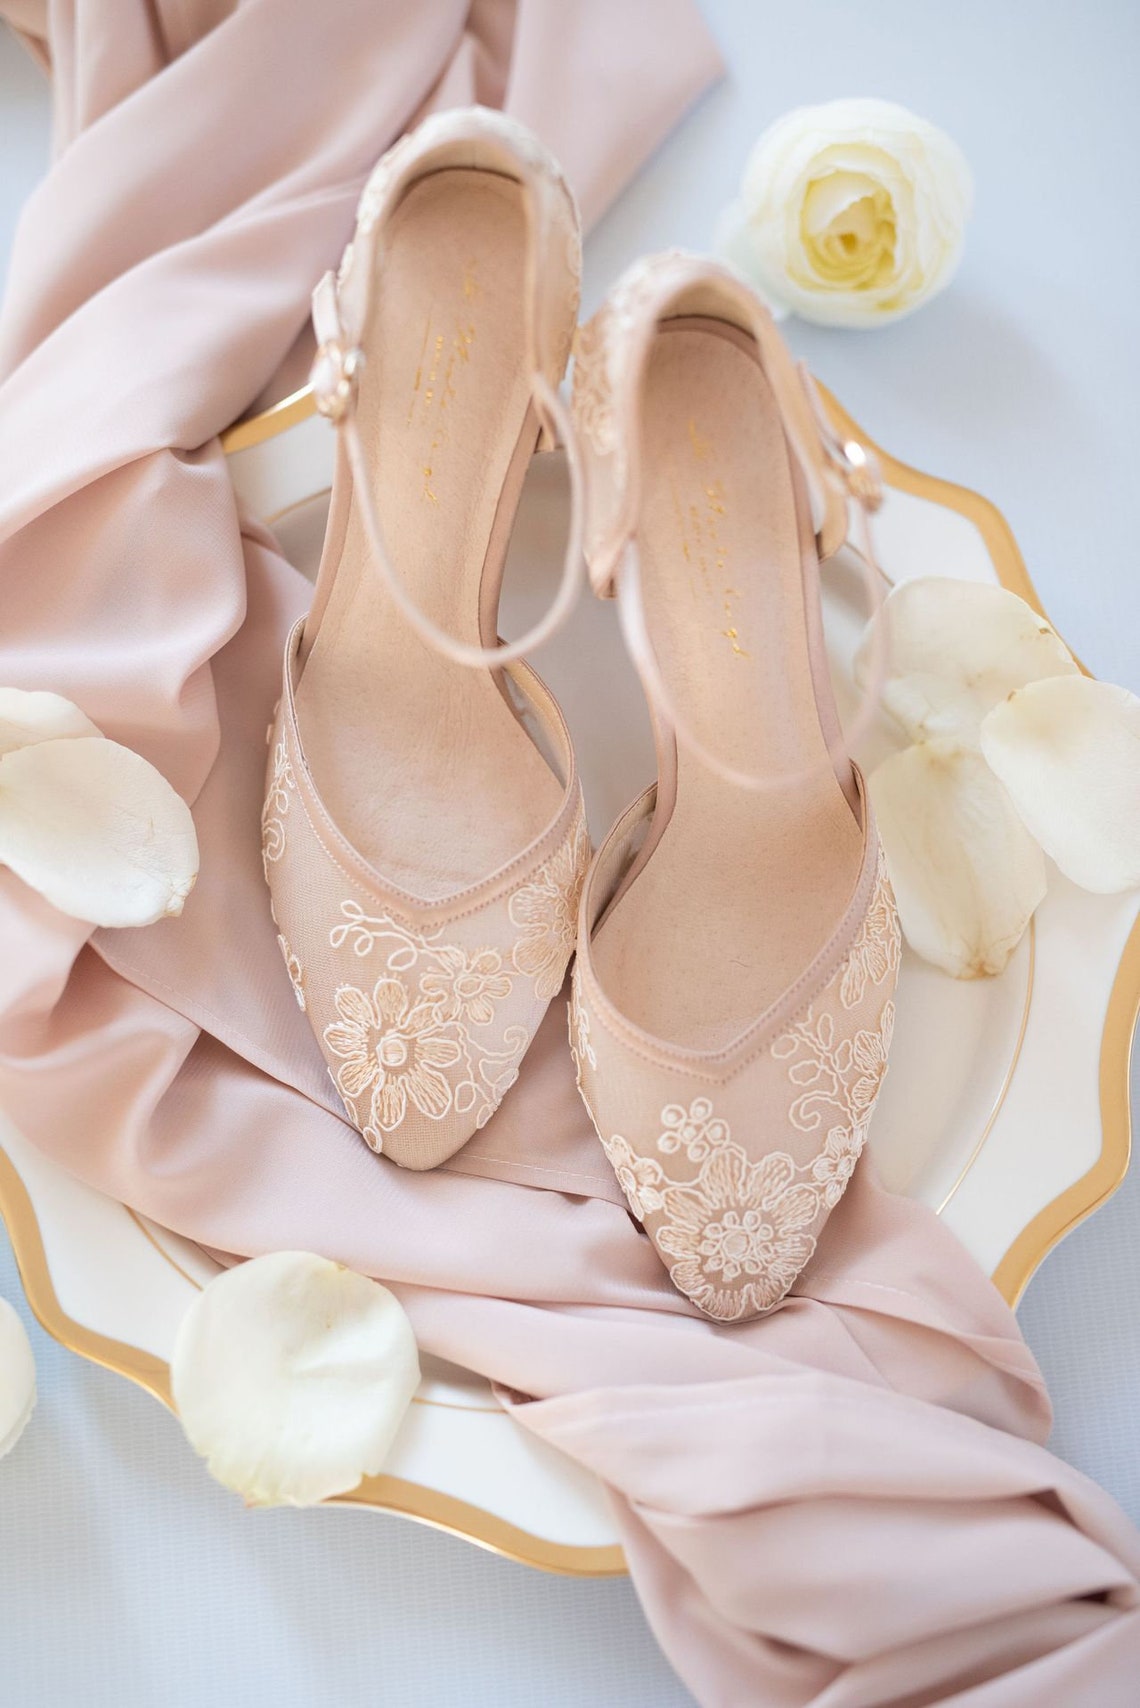 Lace shoes Wedding shoes for bride Bridesmaids shoes Nude image 1